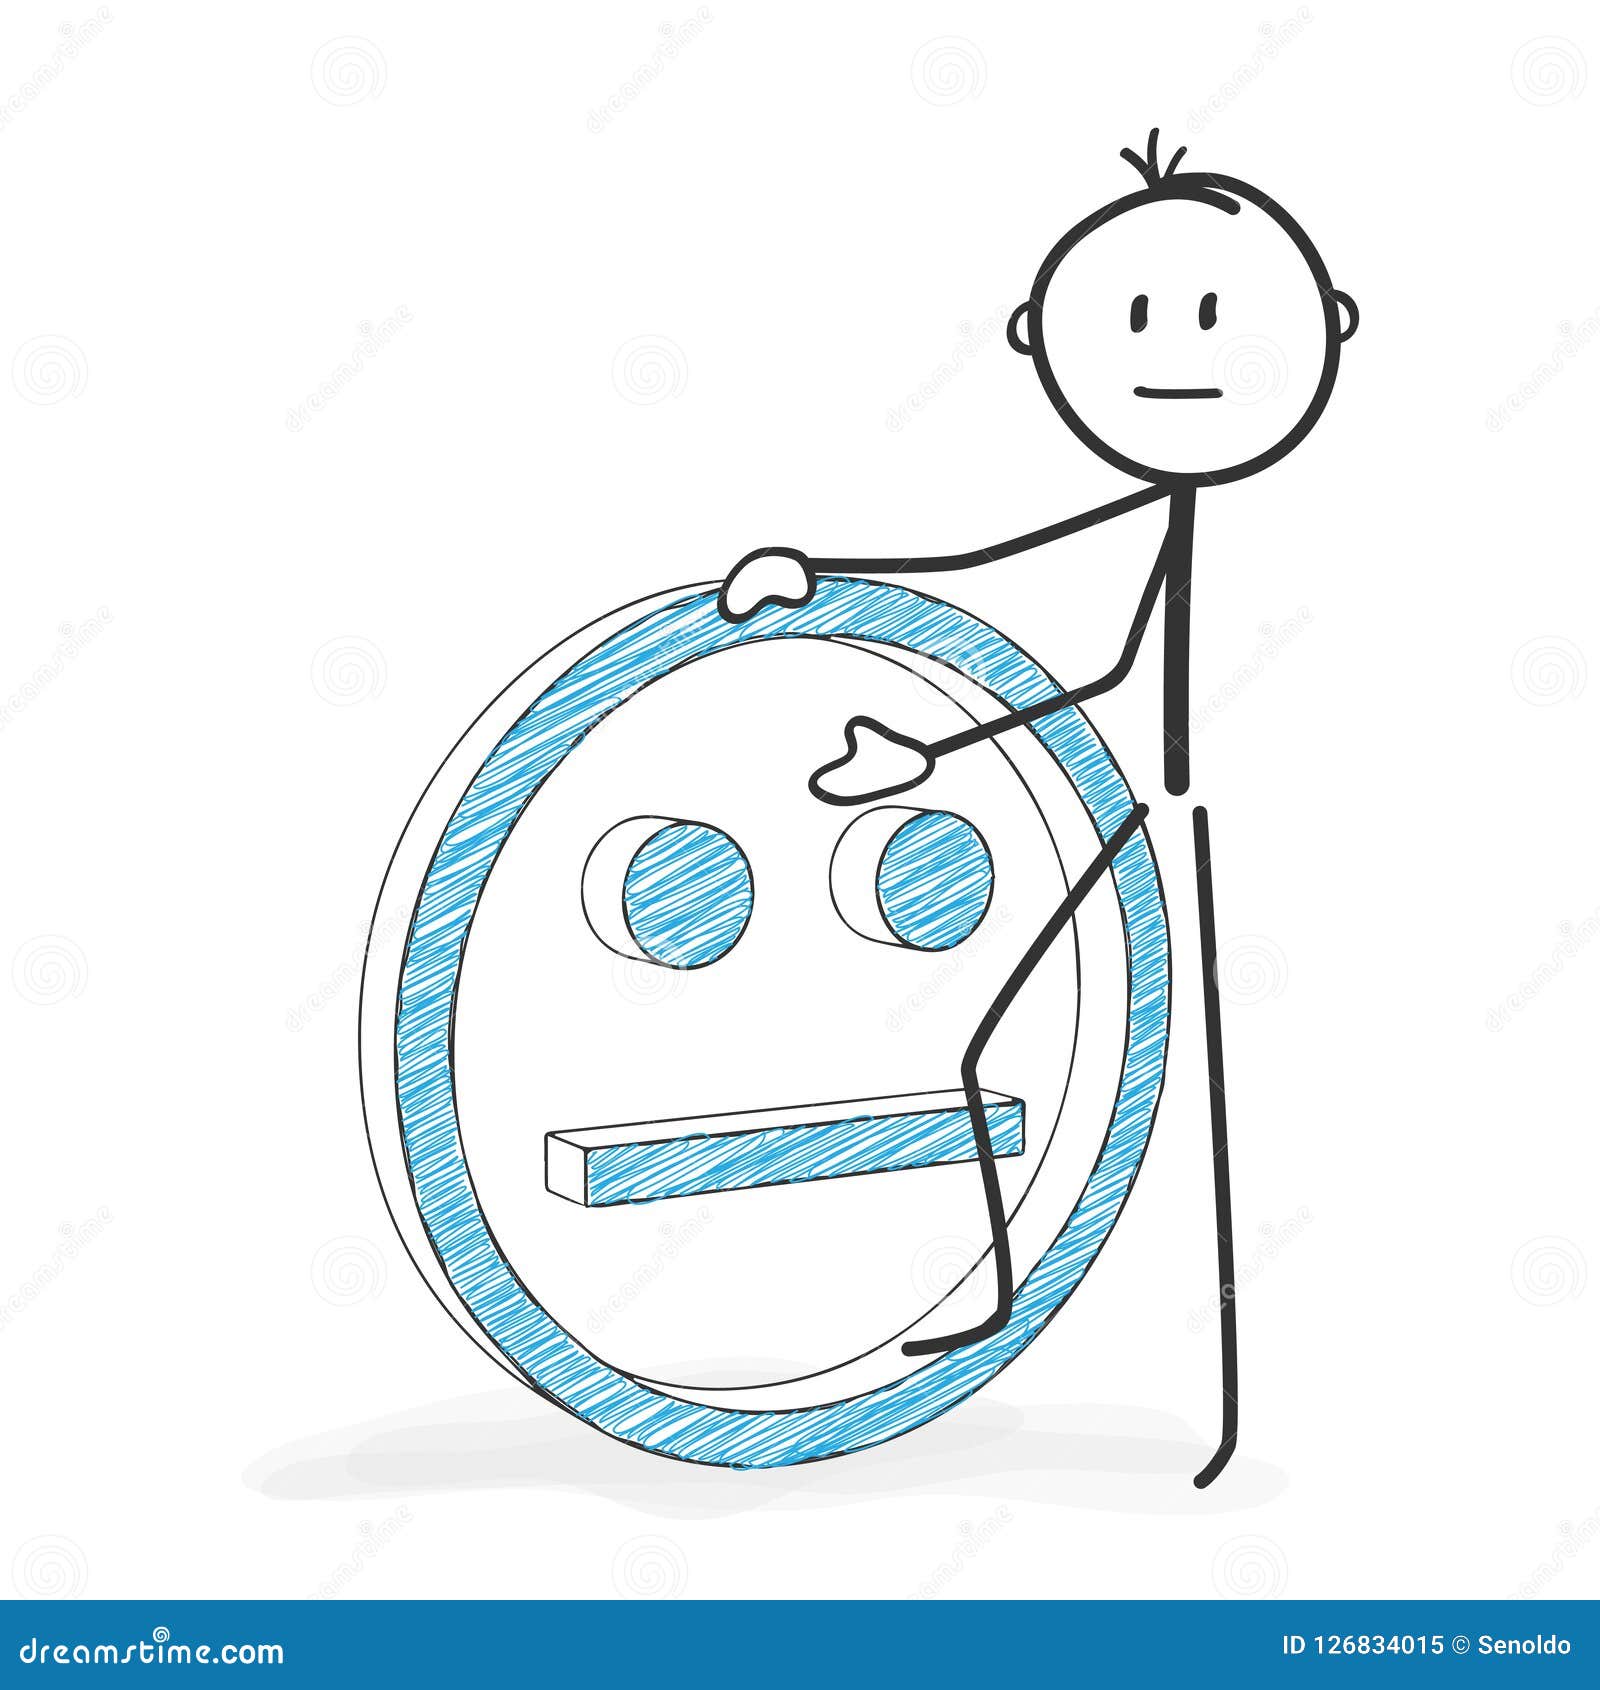 stick figure cartoon - stickman with a neutral smiley icon.